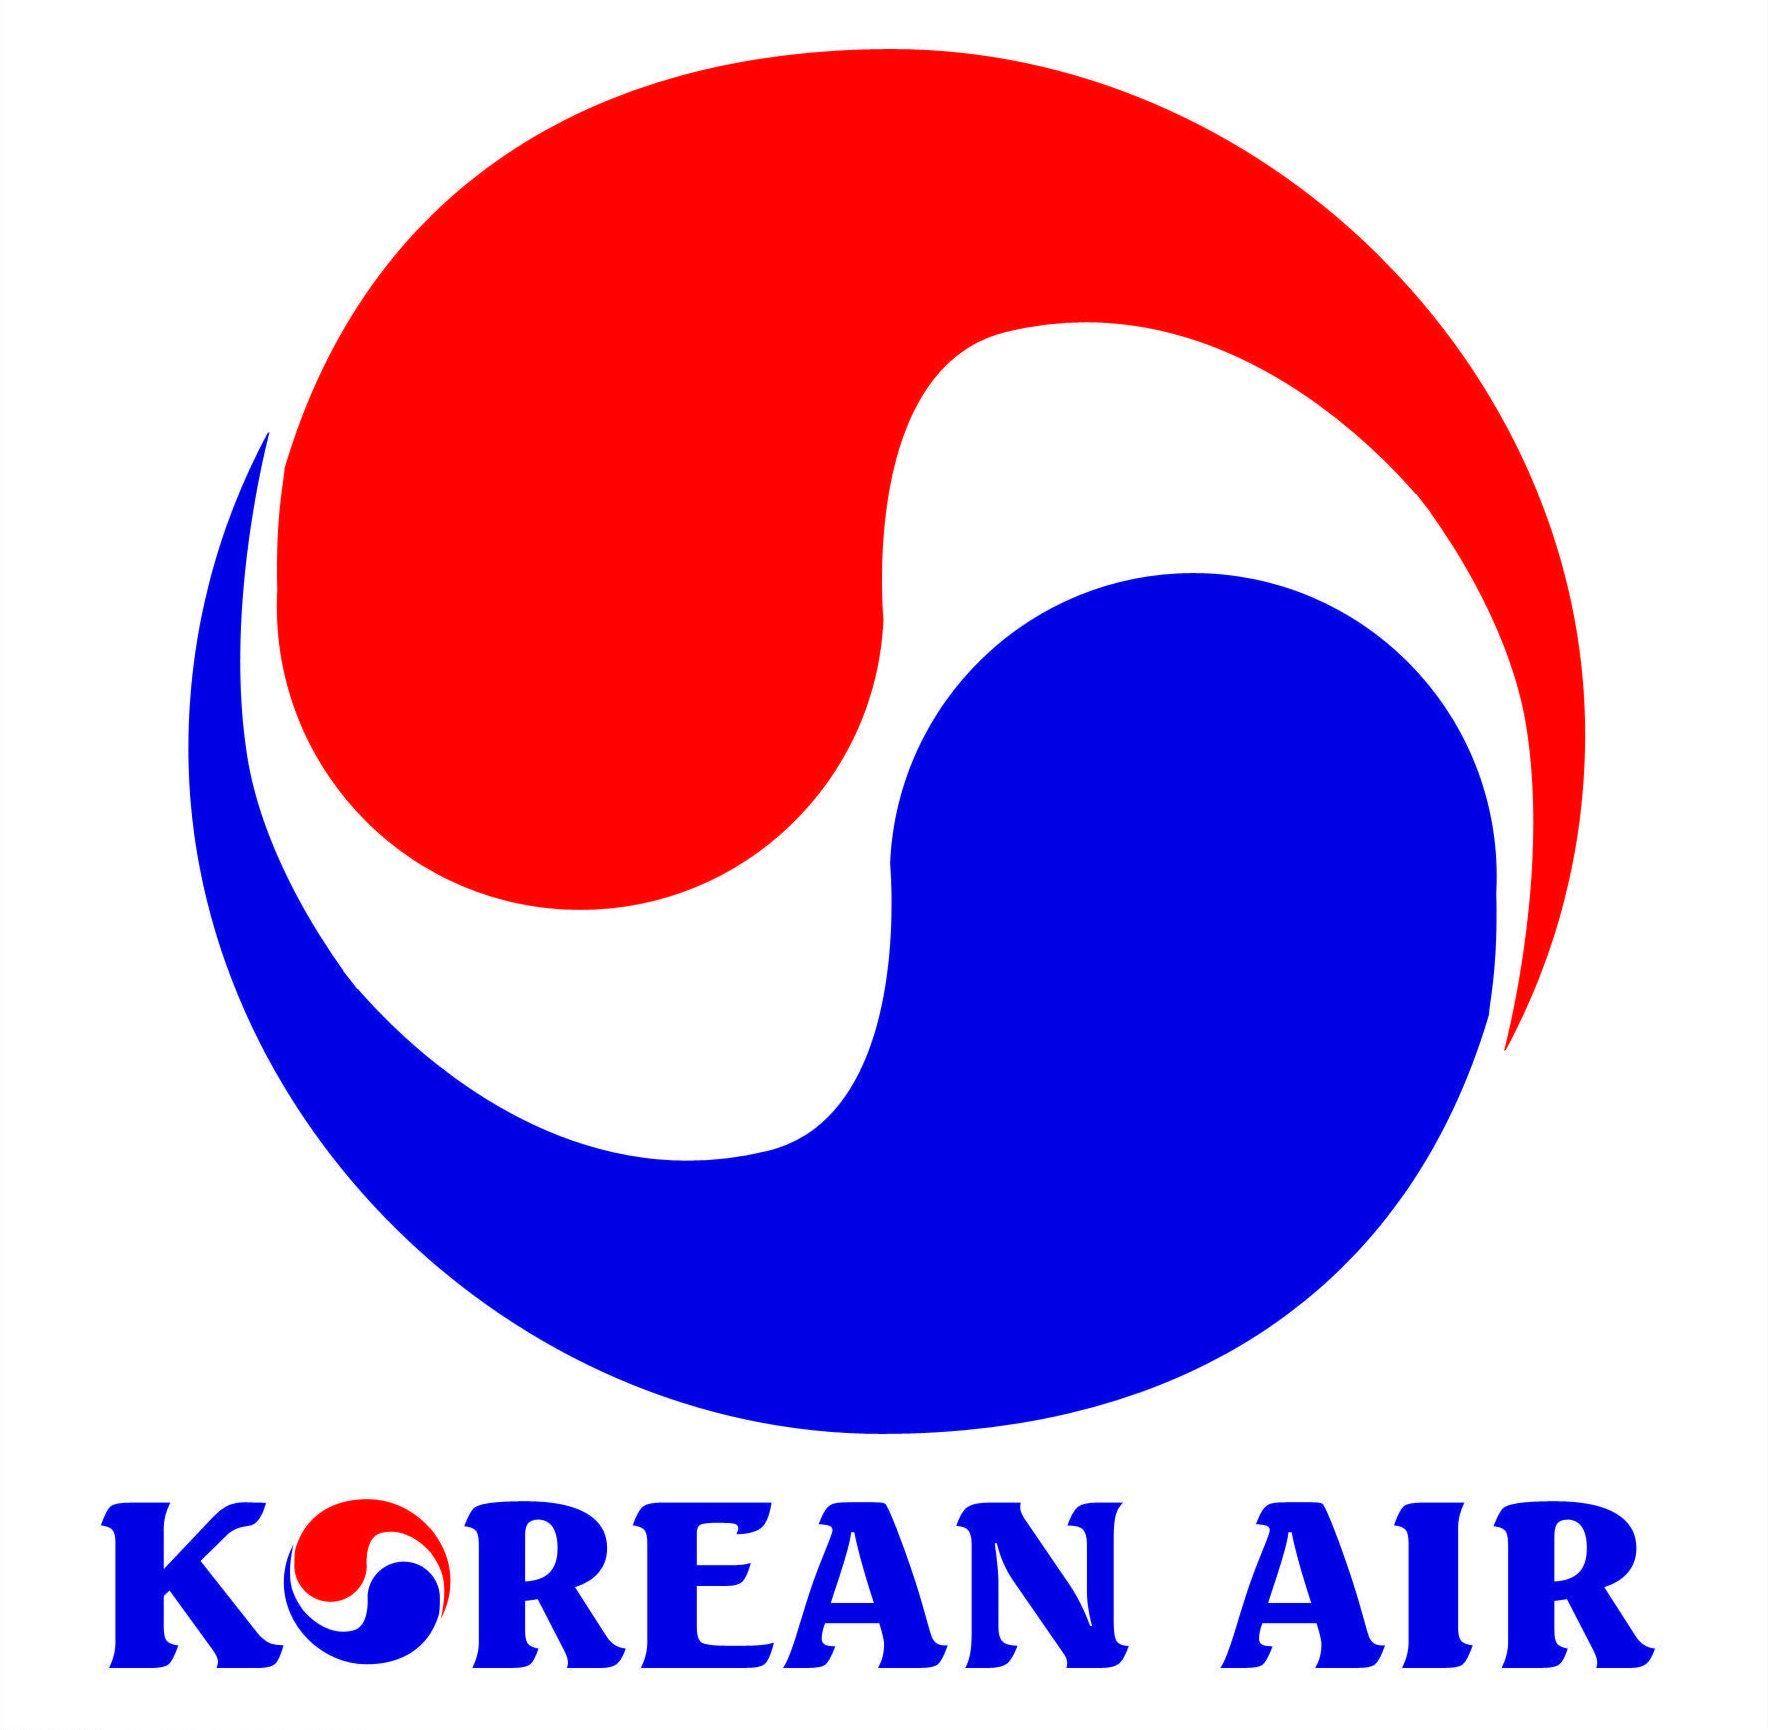 Korean Airlines Logo - Korean Air (South Korean airline) | ctc presentation | Airline logo ...